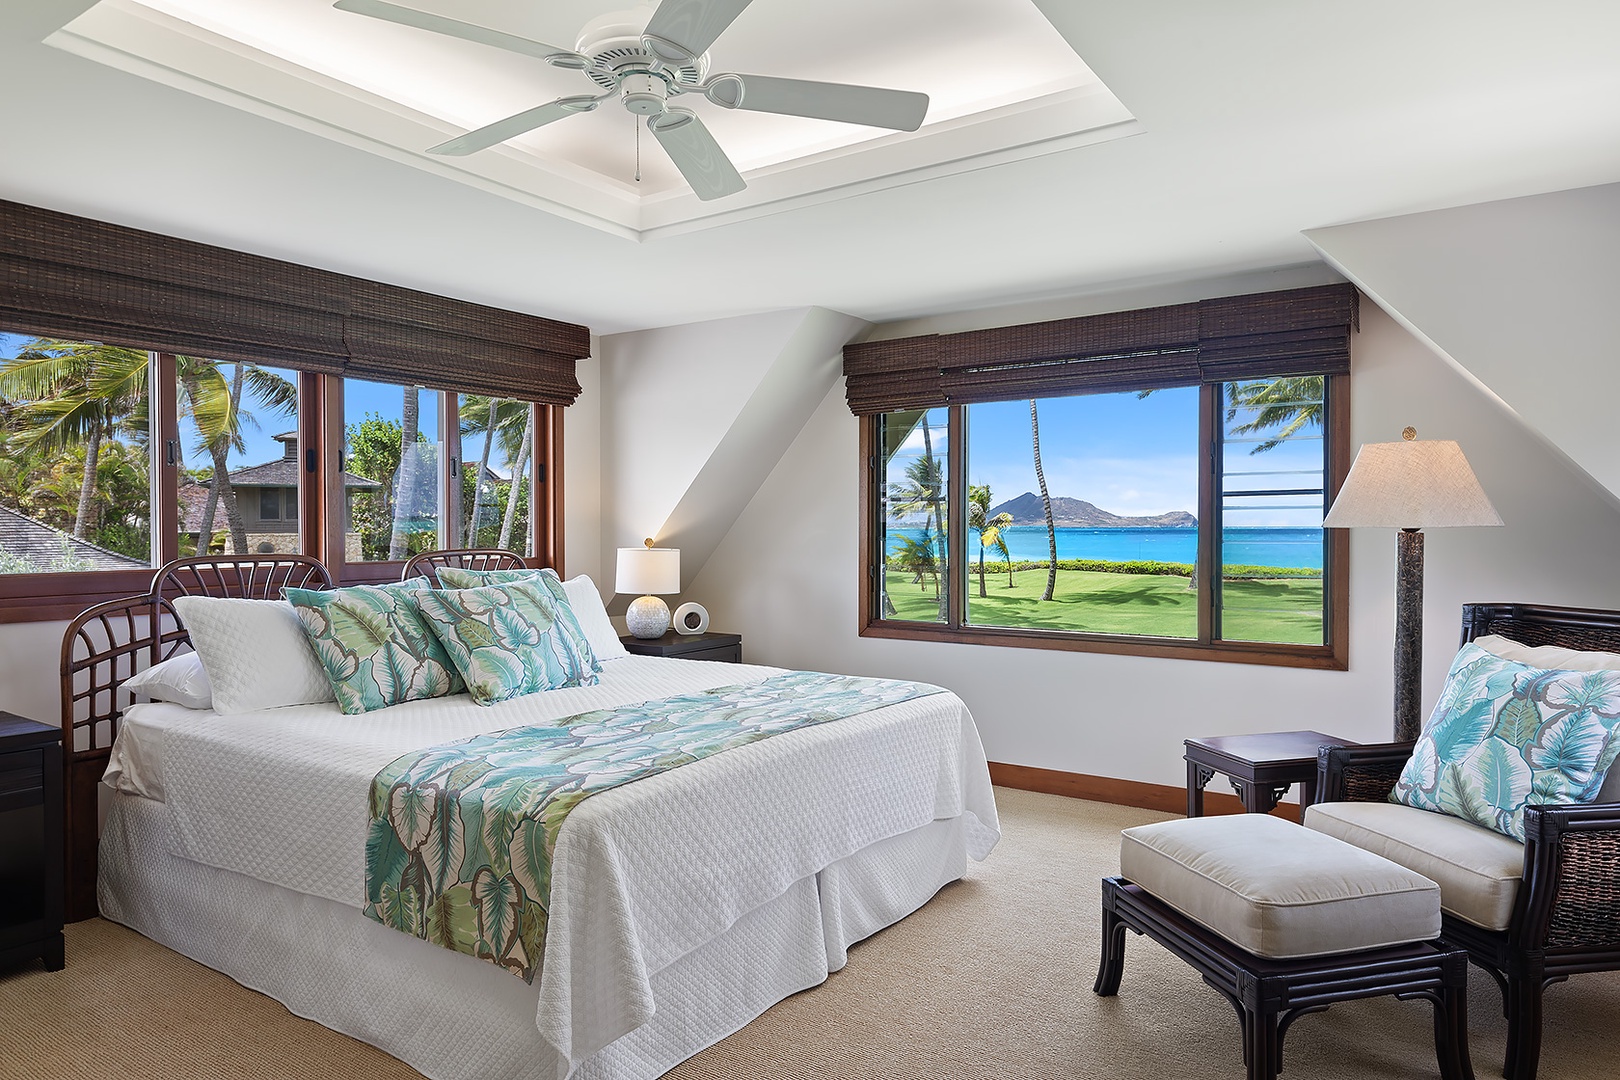 Kailua Vacation Rentals, Kailua Shores Estate 8 Bedroom - Main House - Upstairs Primary Bedroom